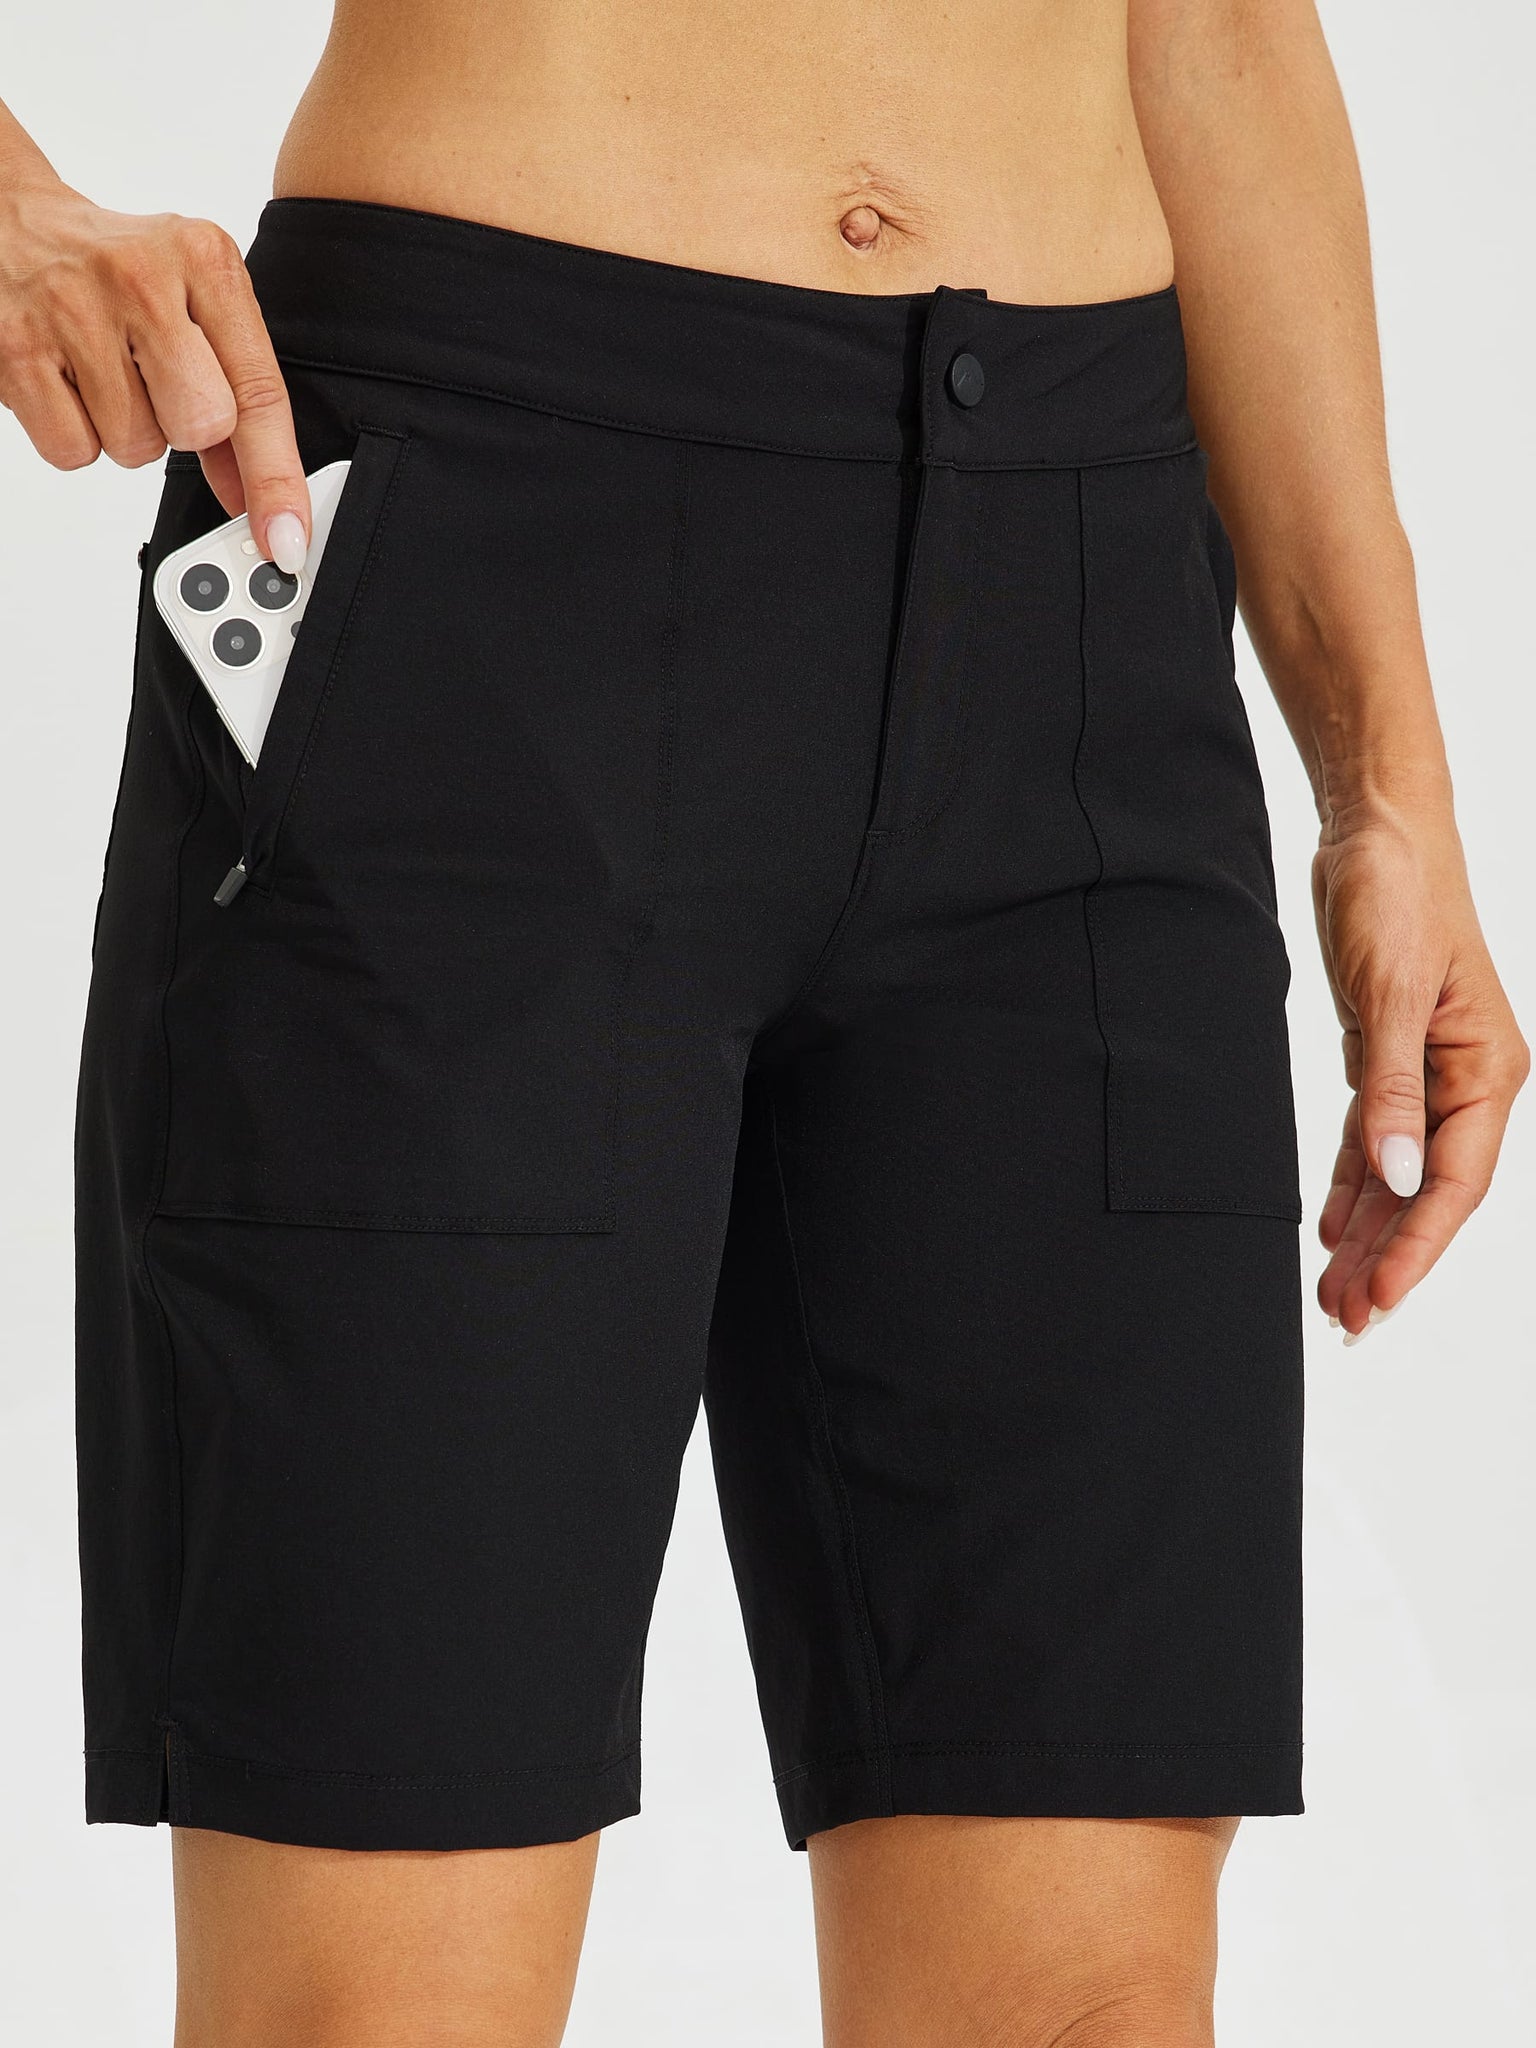 Women's Quick Dry Cargo Shorts_Black_model2